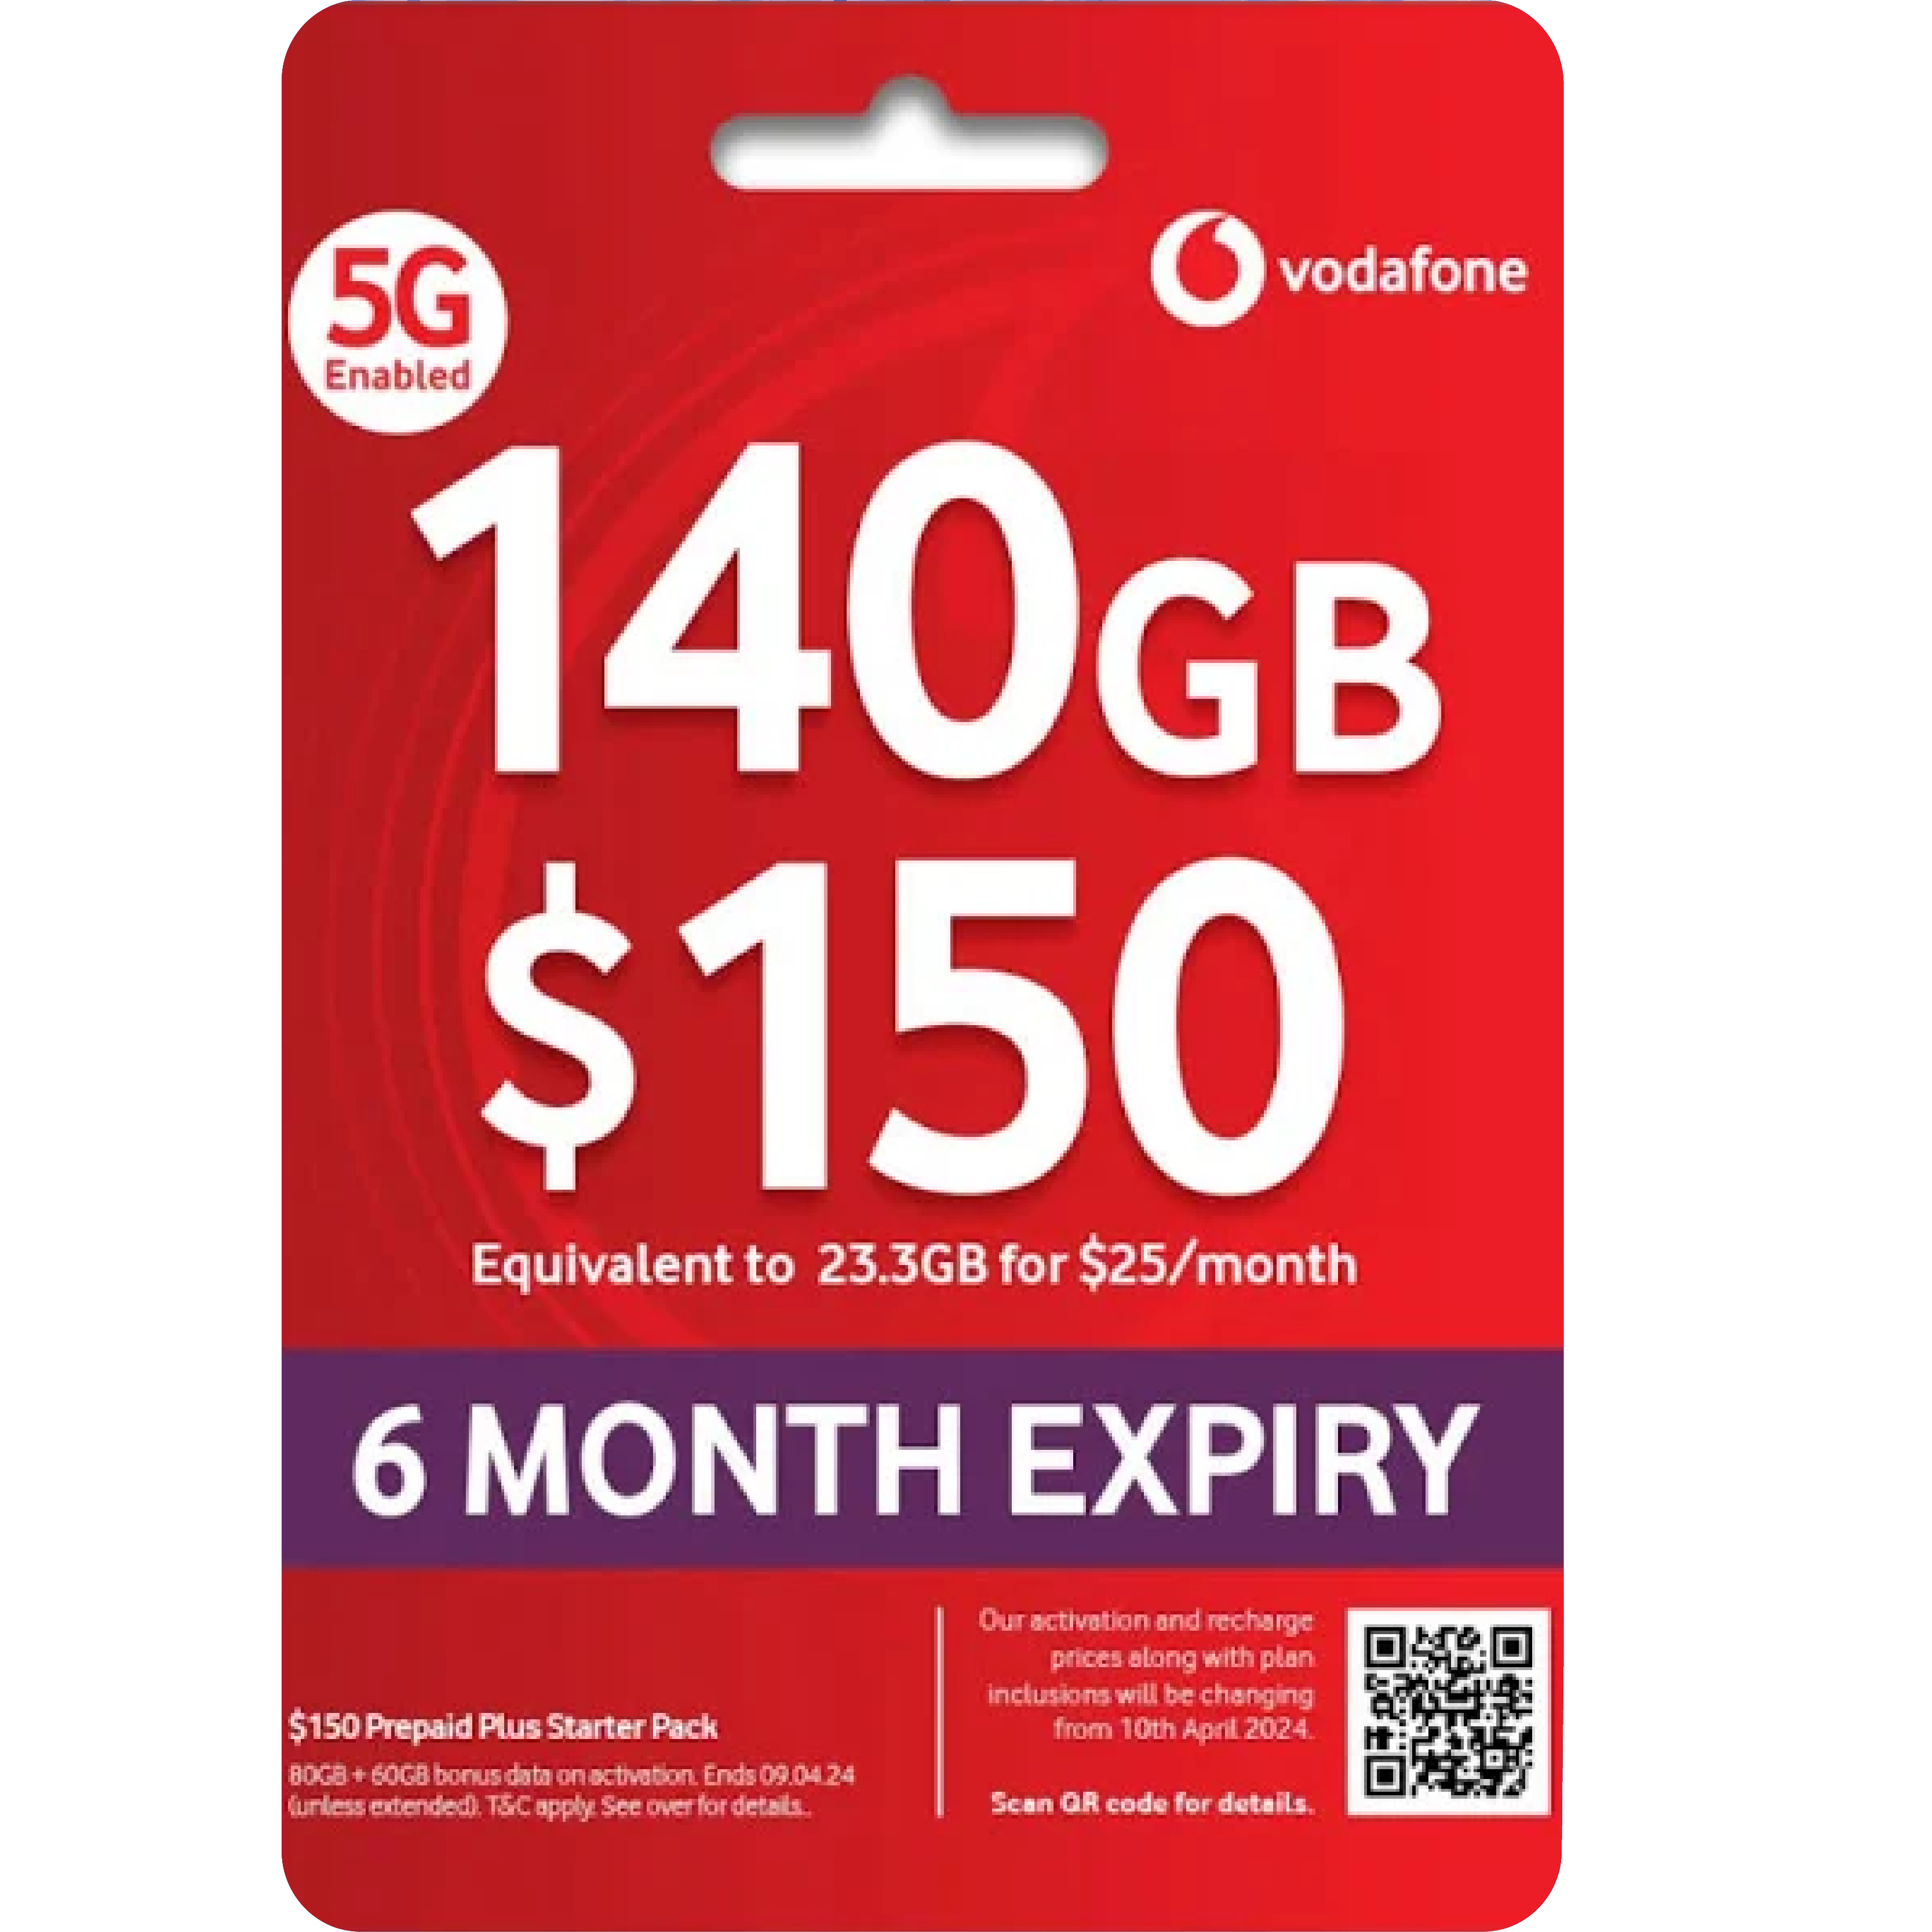 FreeSIMcards Vodafone 140GB Plan Card